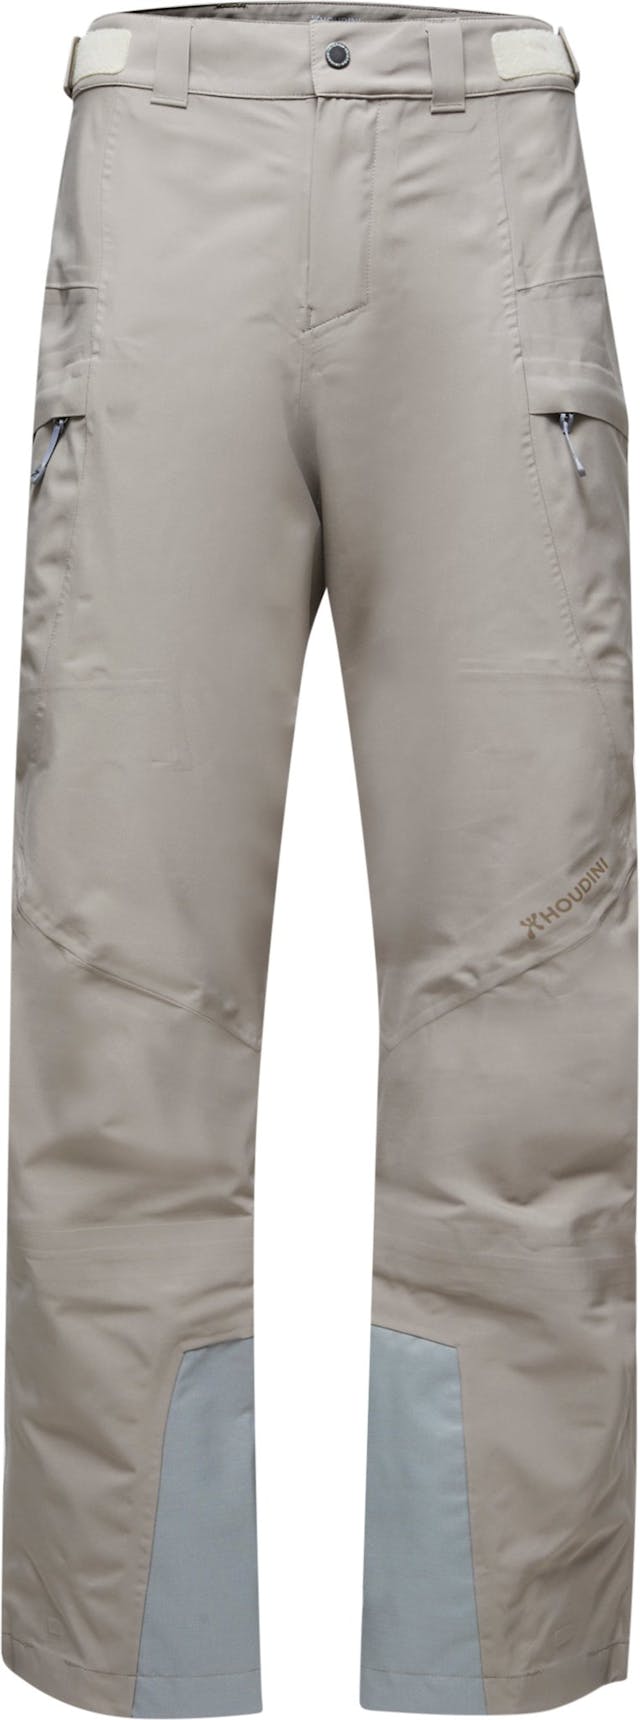 Product image for Angular Pants - Men's